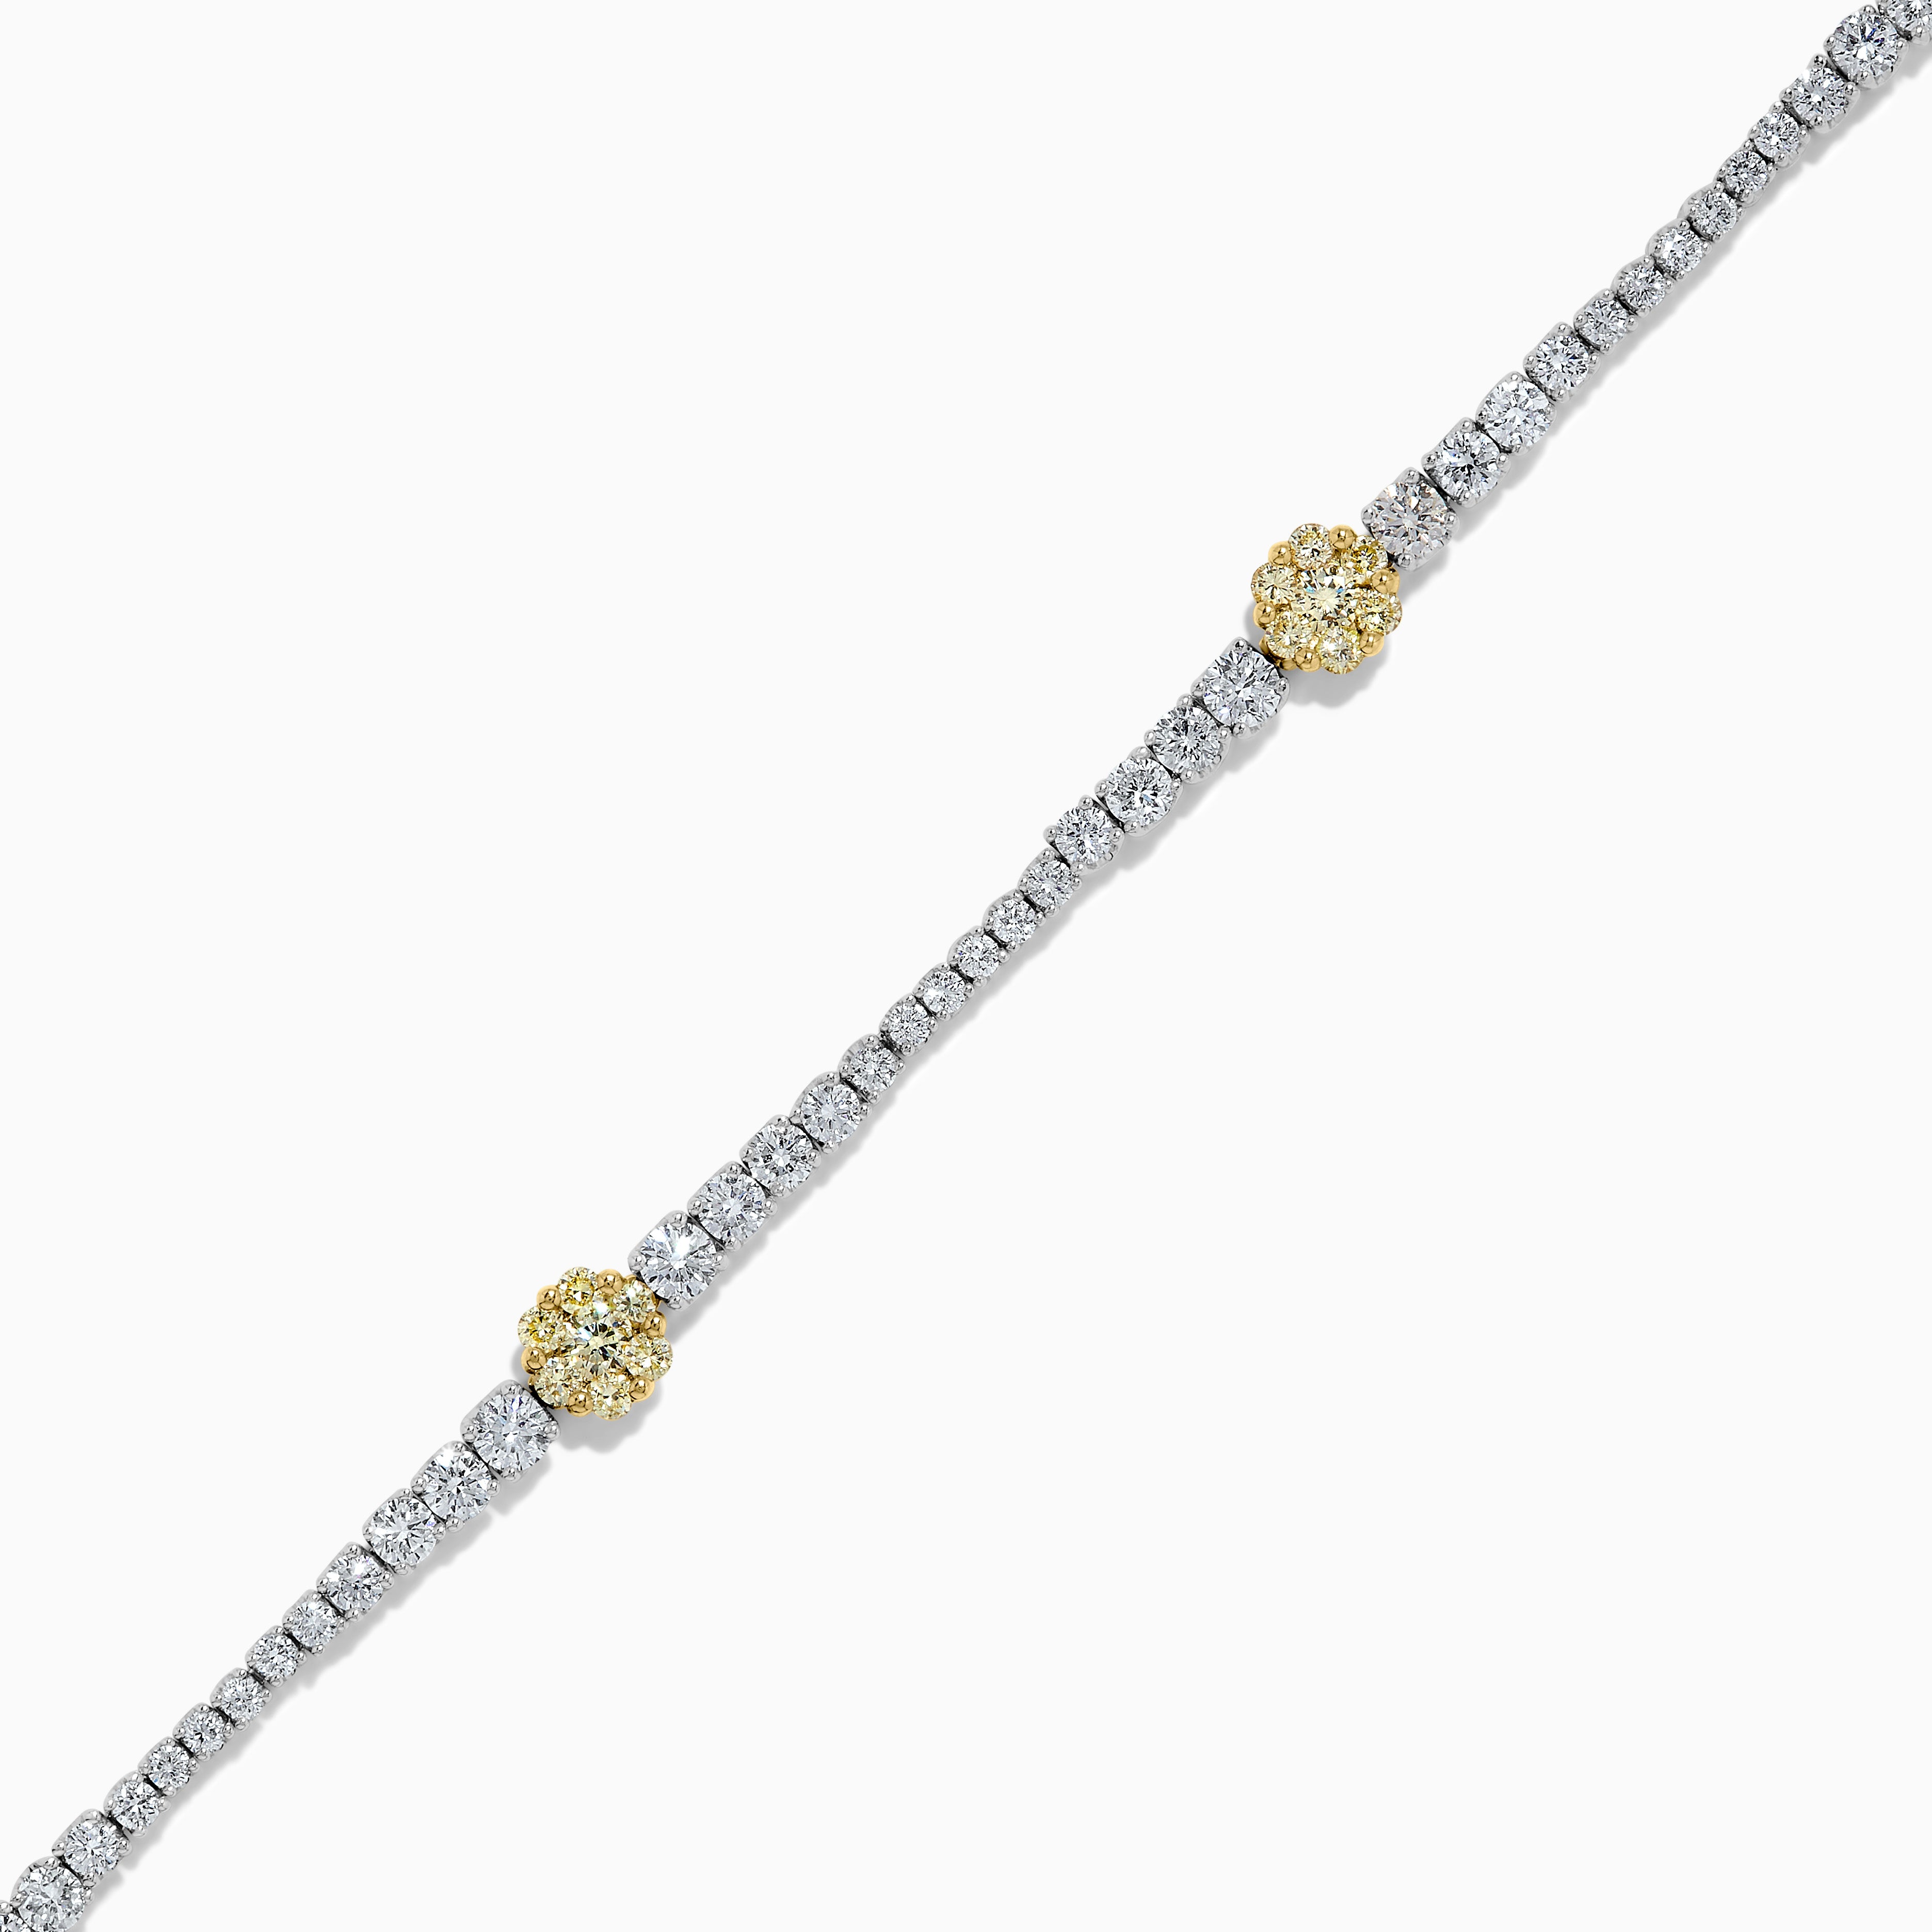 Natural Yellow Round and White Diamond 3.39 Carat TW Gold Bracelet